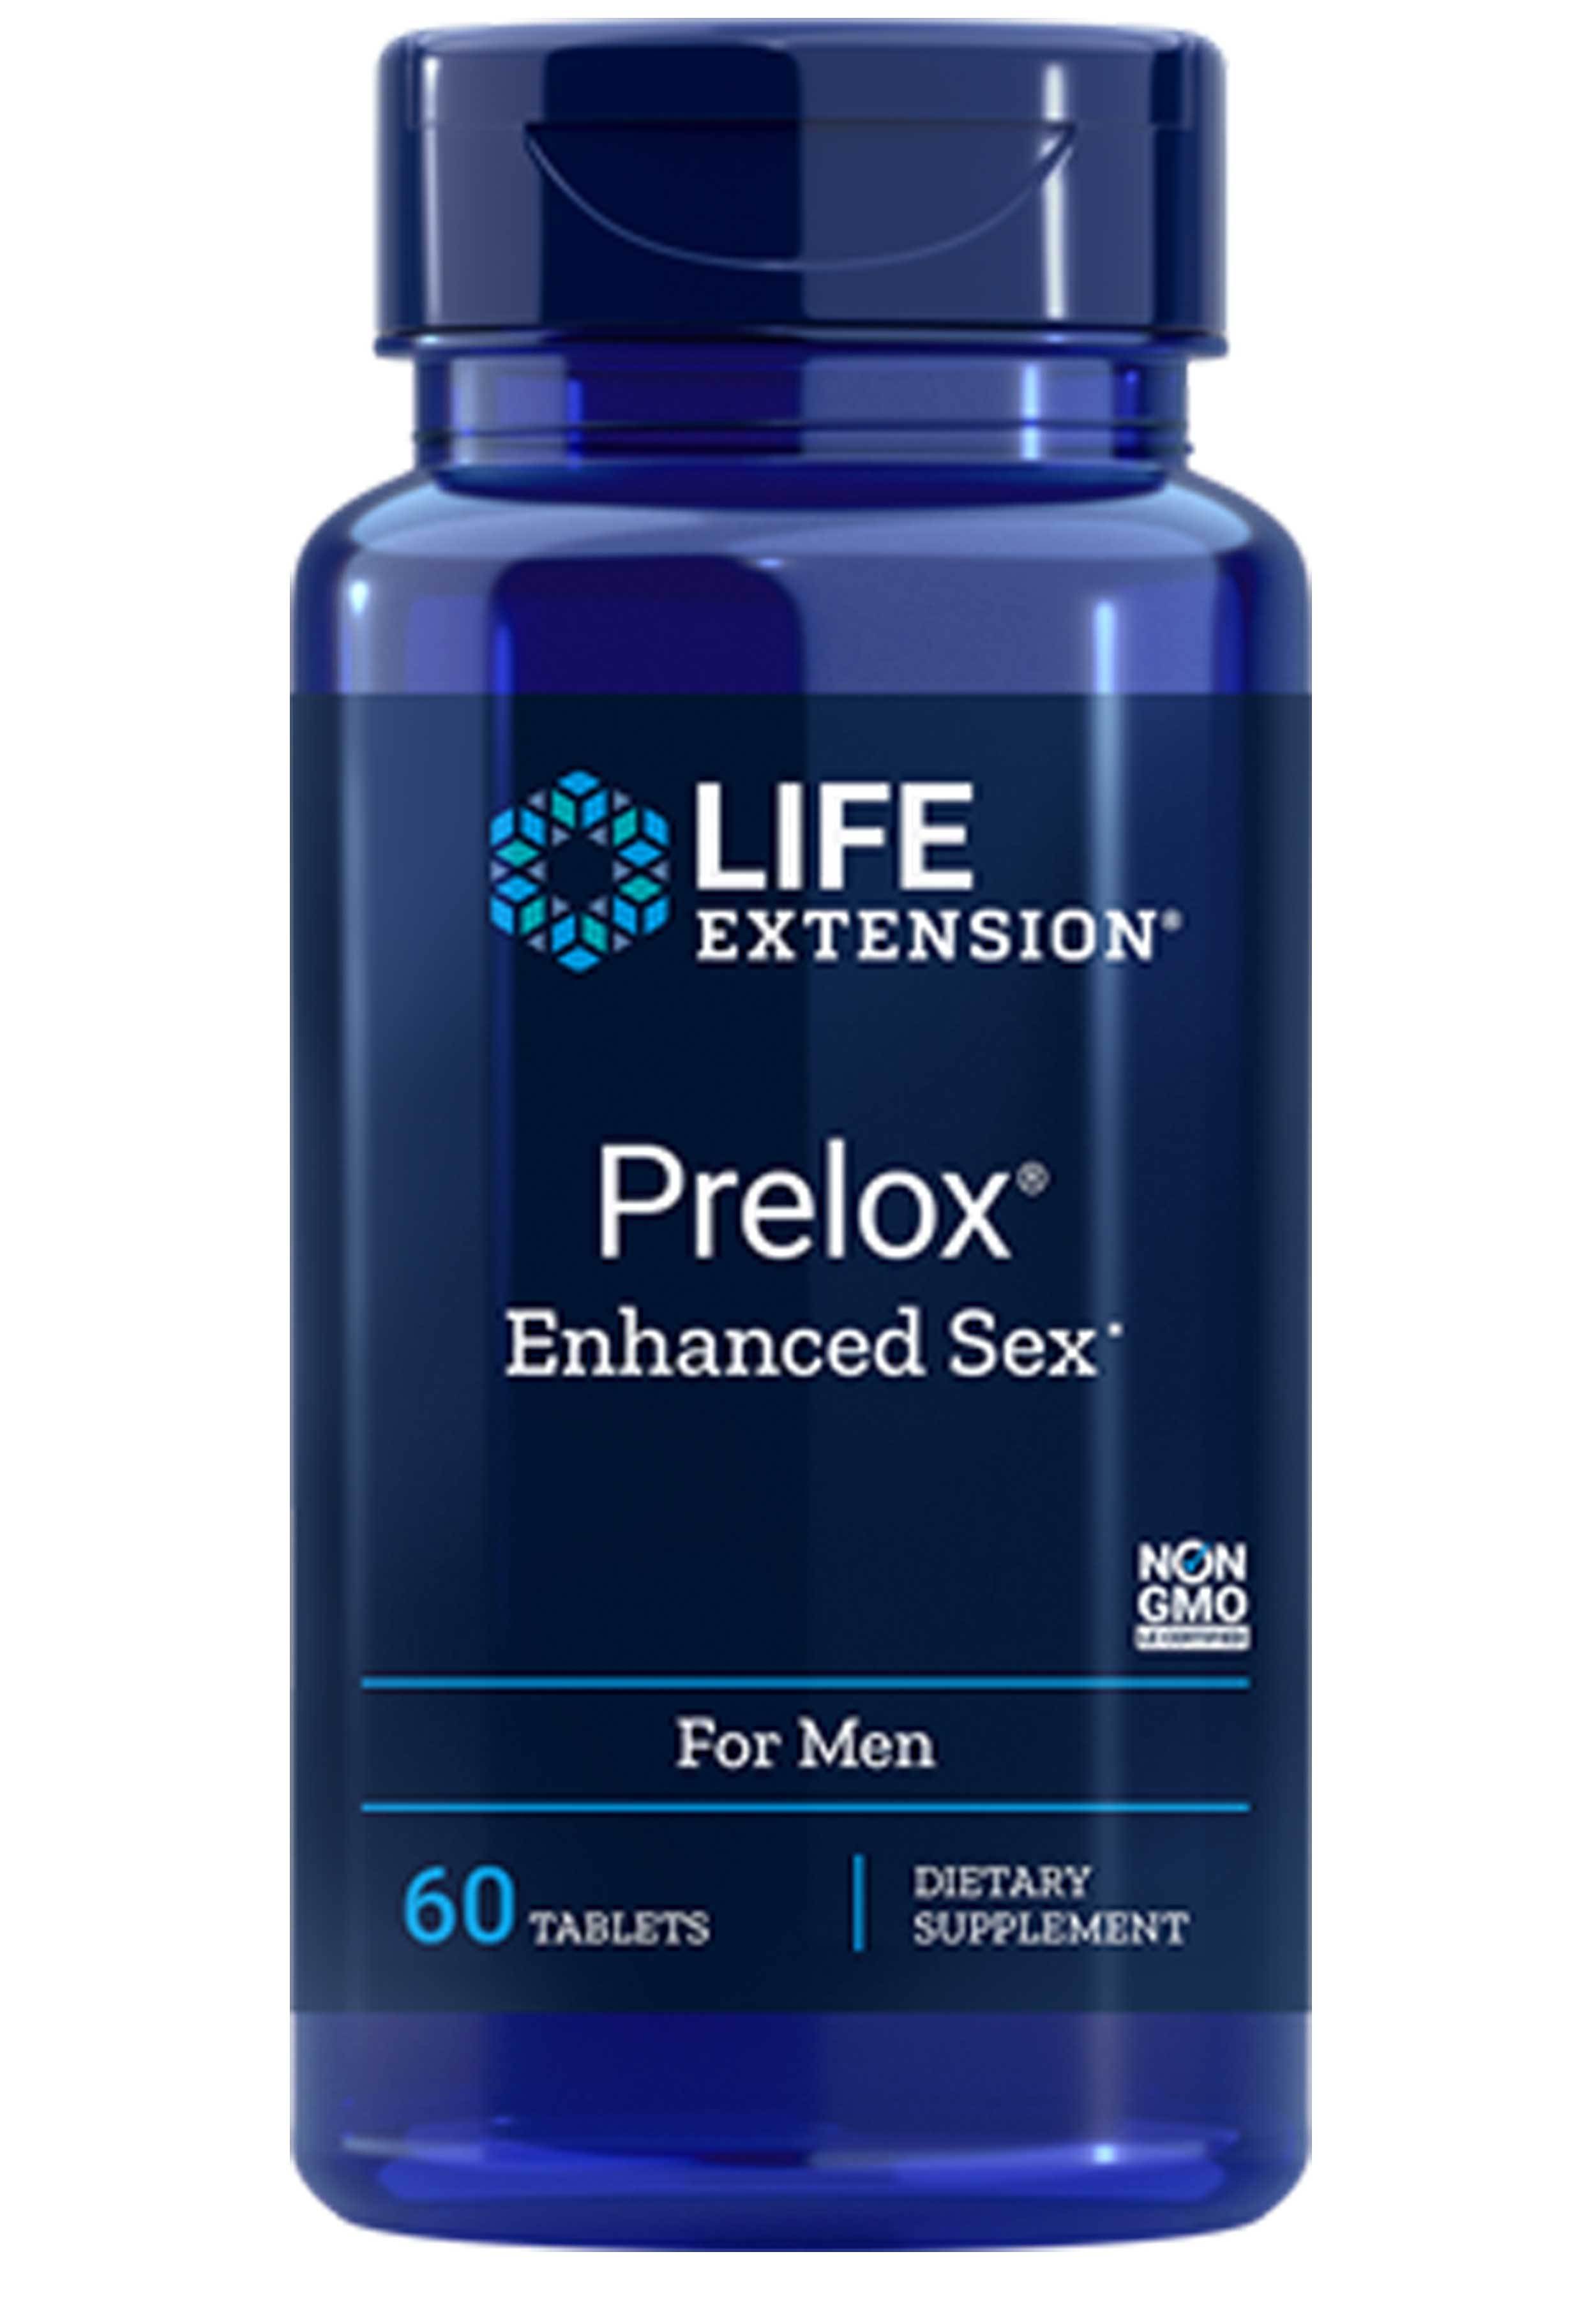 Life Extension Prelox Natural Sex for Men